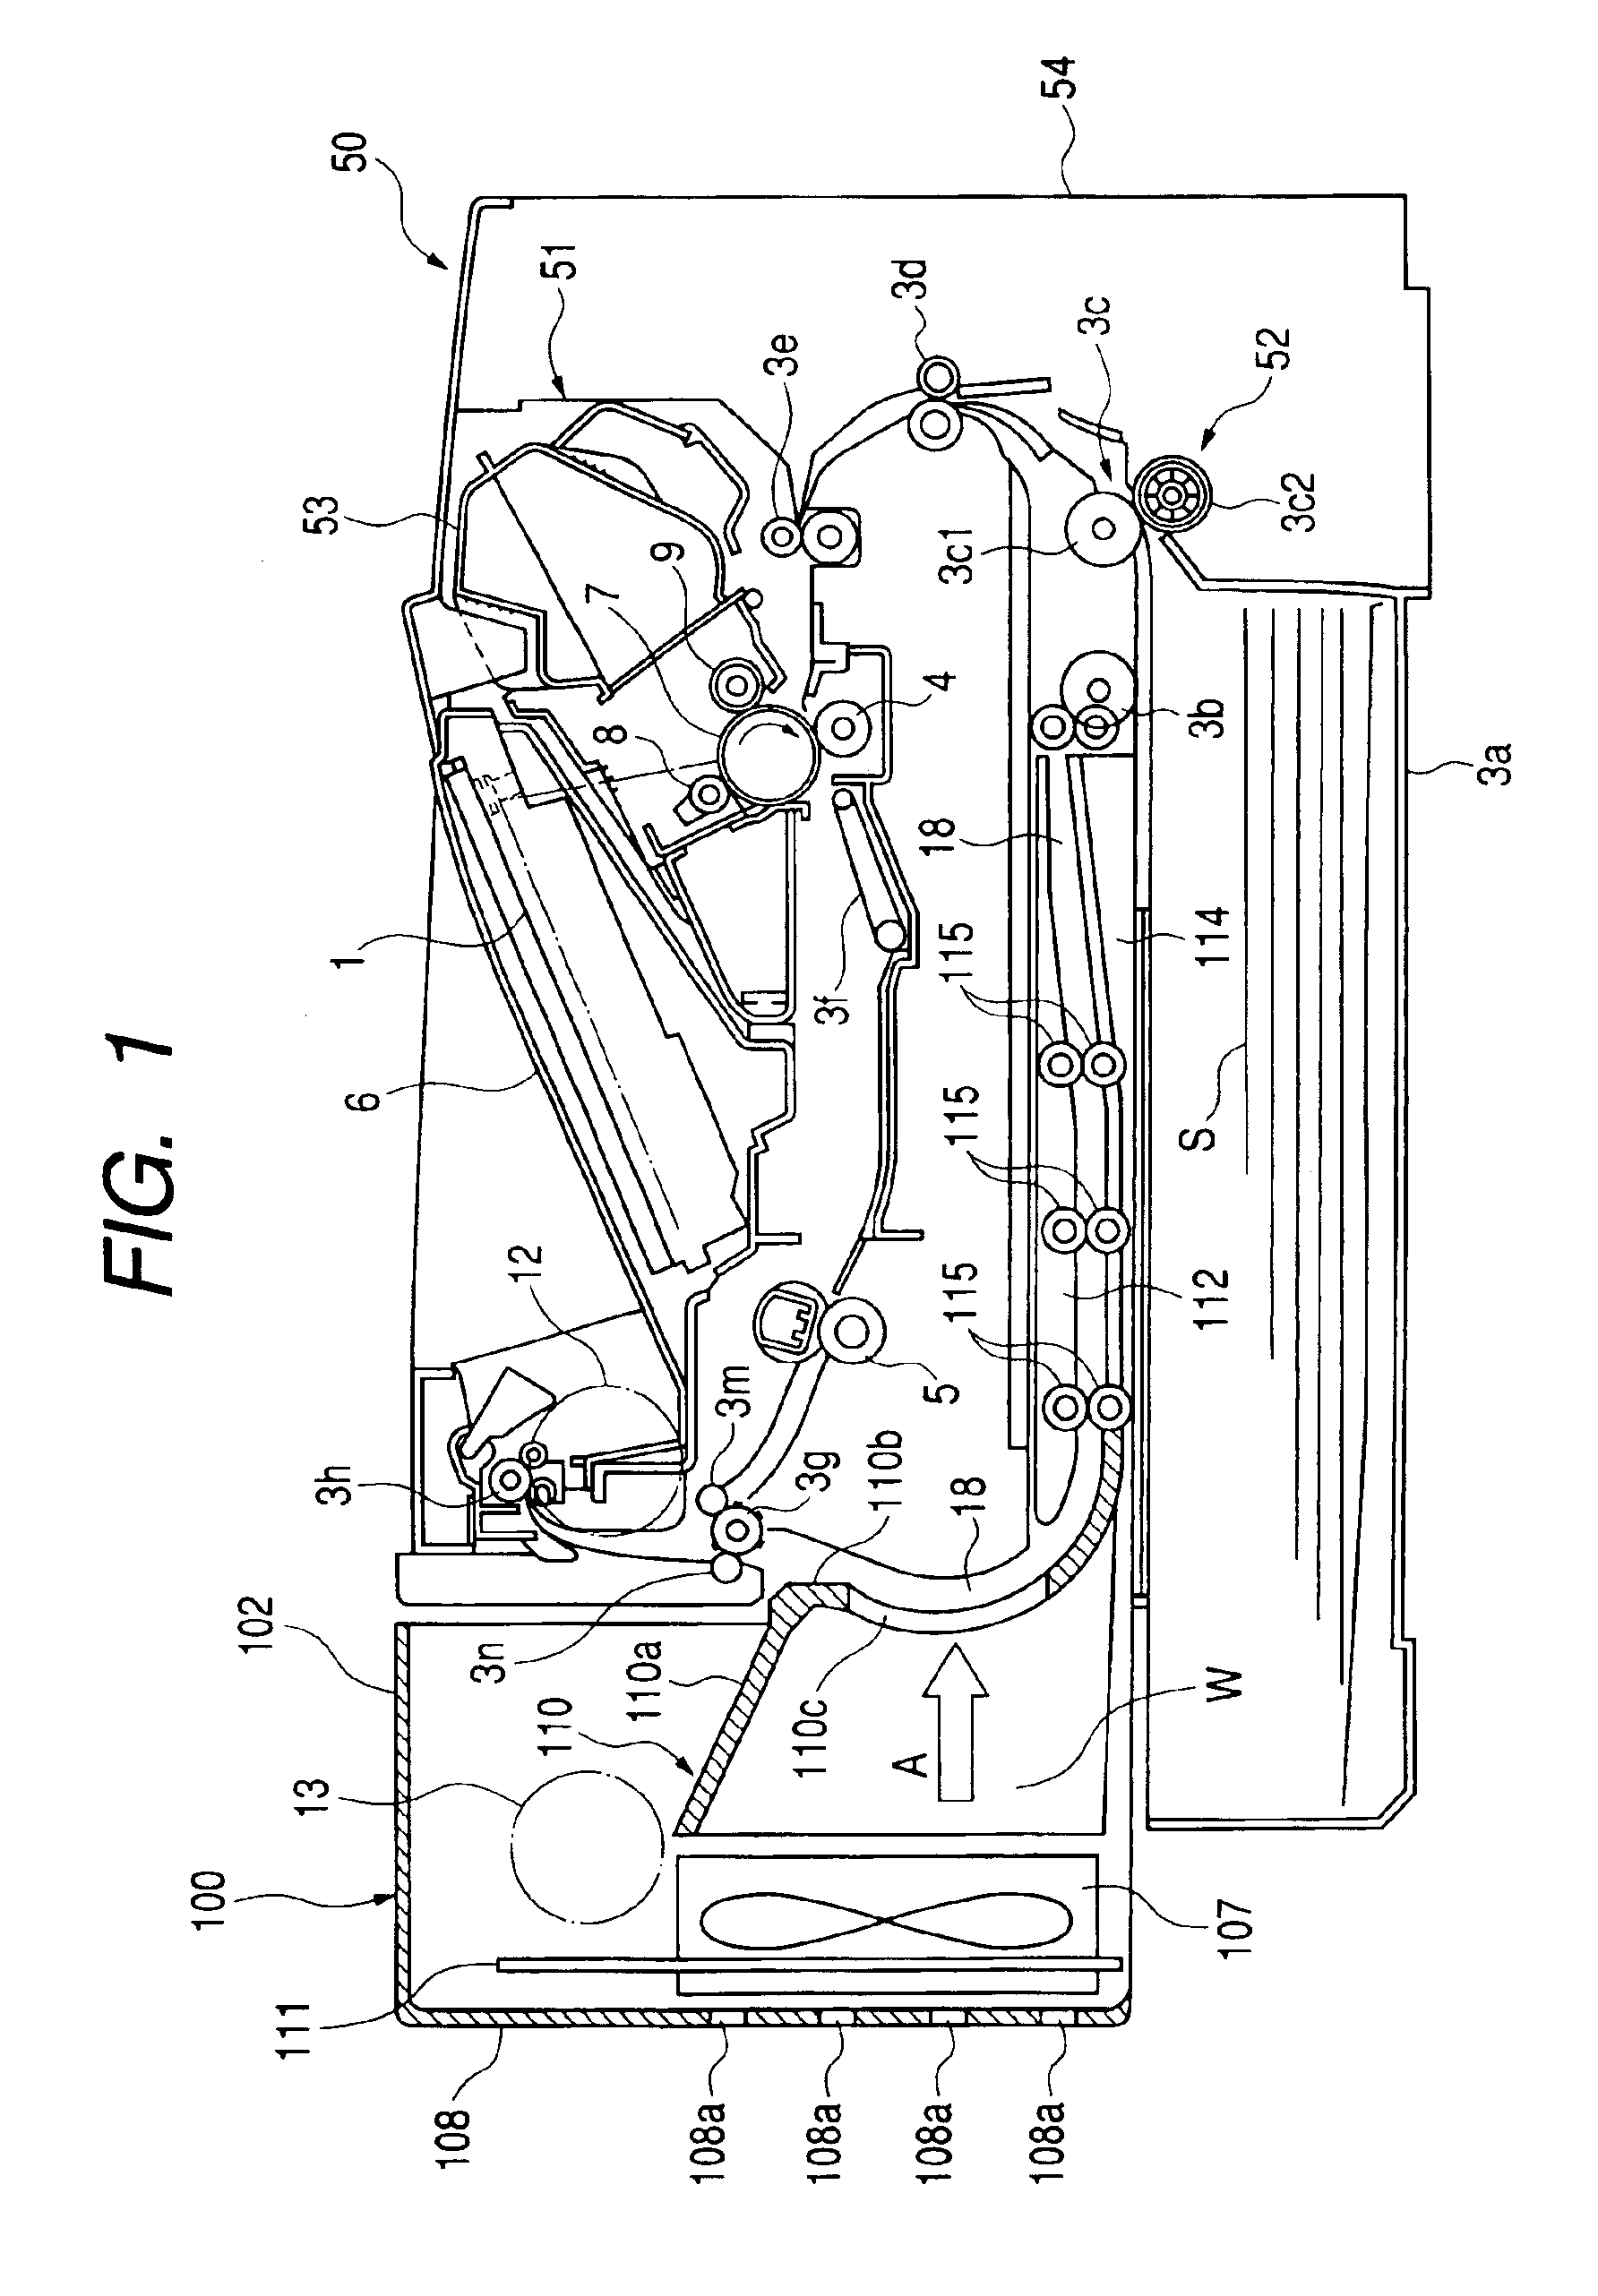 Sheet transport apparatus and image forming apparatus